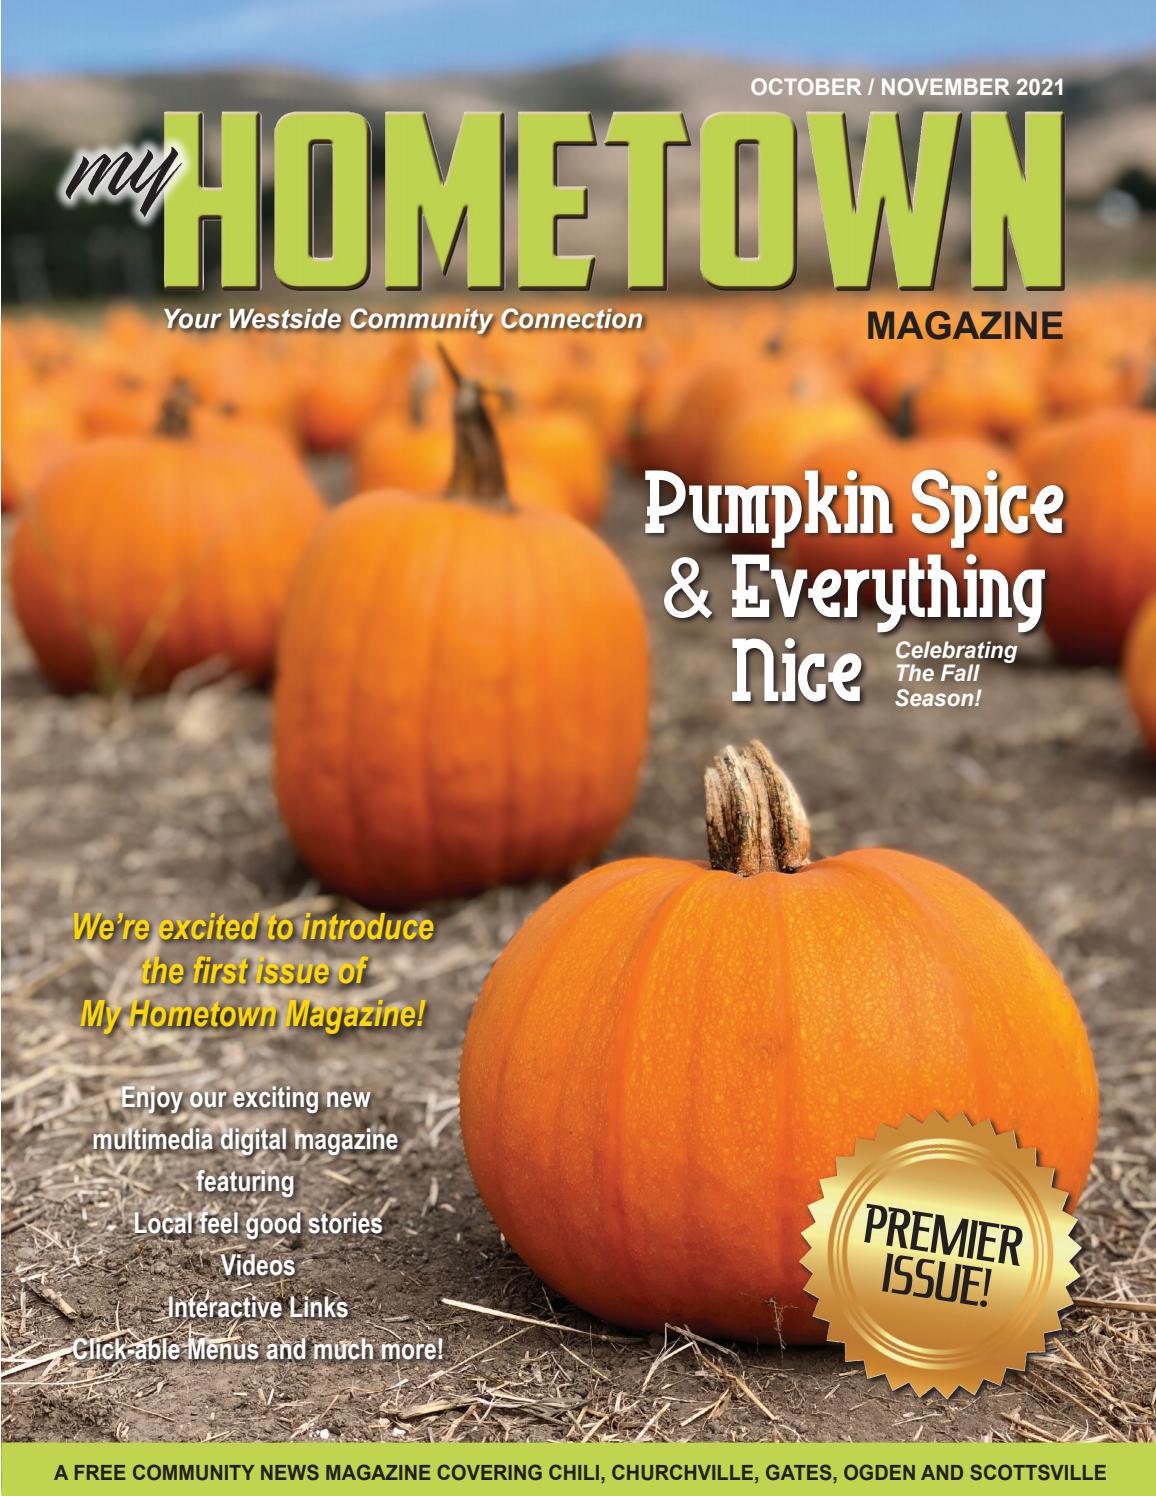 My Hometown Magazine - October / November 2021 Issue